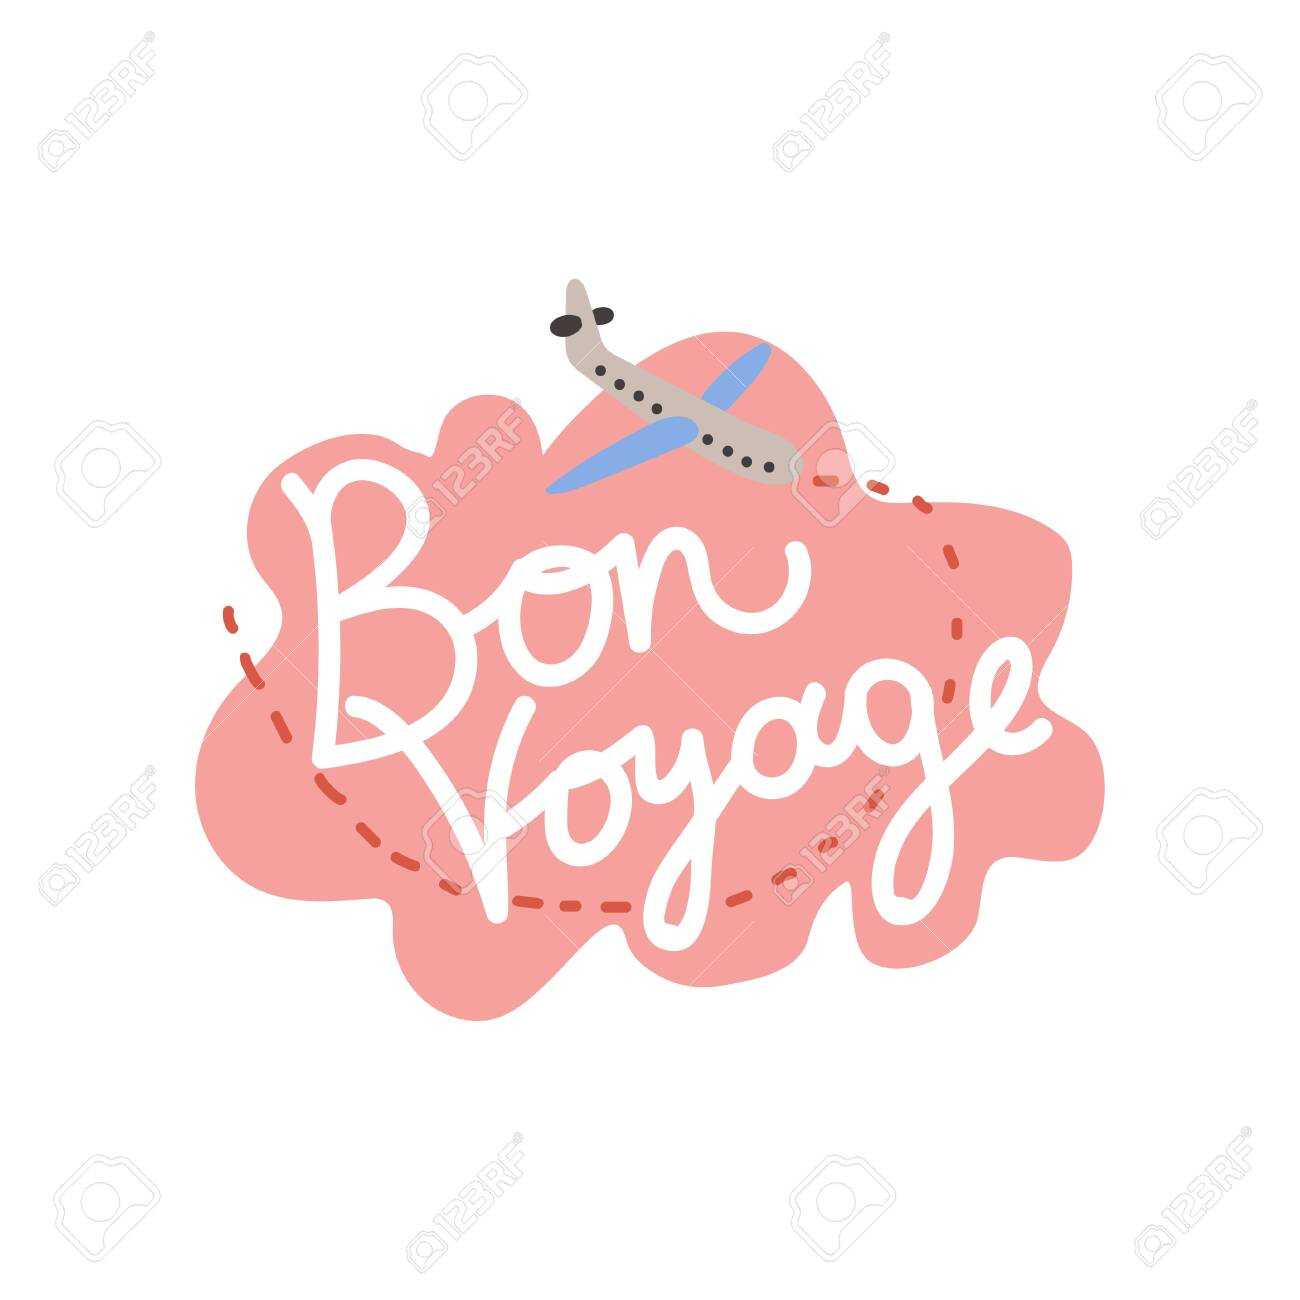 Bon Voyage, Have Nice Trip Banner Template Vector Illustration Throughout Bon Voyage Card Template